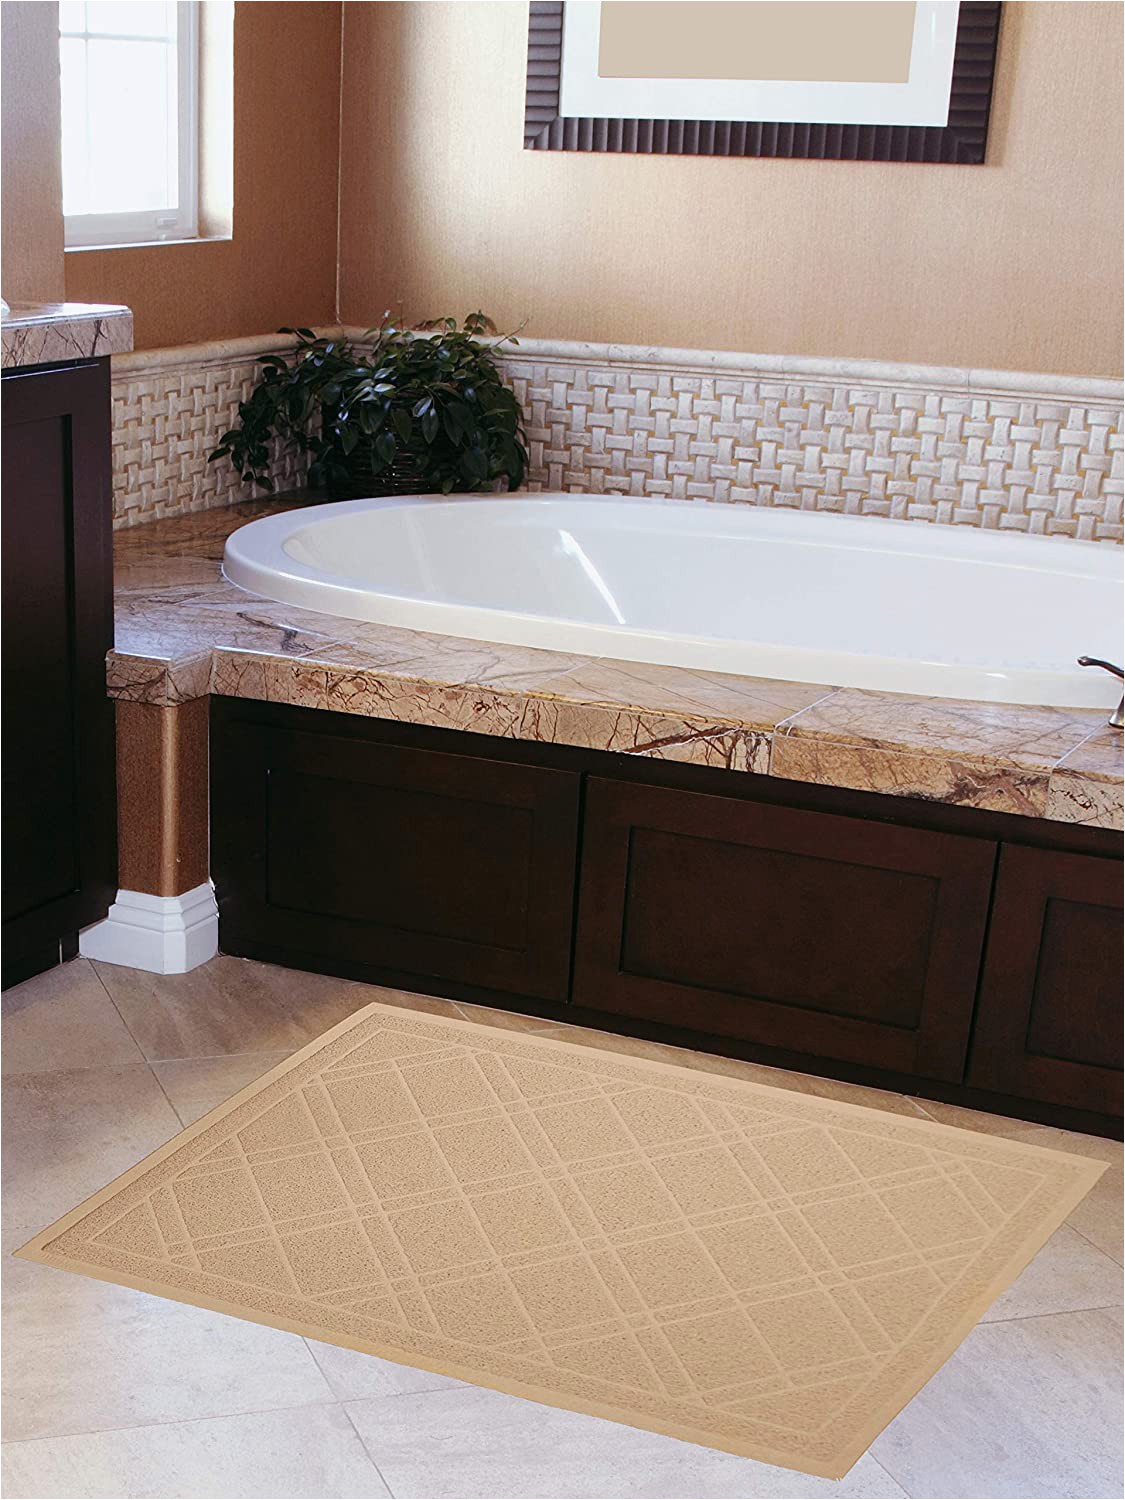 Low Profile Bathroom Rug Iprimio Bathroom Mat for Shower Bath Low Profile Non Slip Nursing Homes Bathtub and Sink – 35×23 Gray Plaid Design – Duraloop Anti Slip Durable